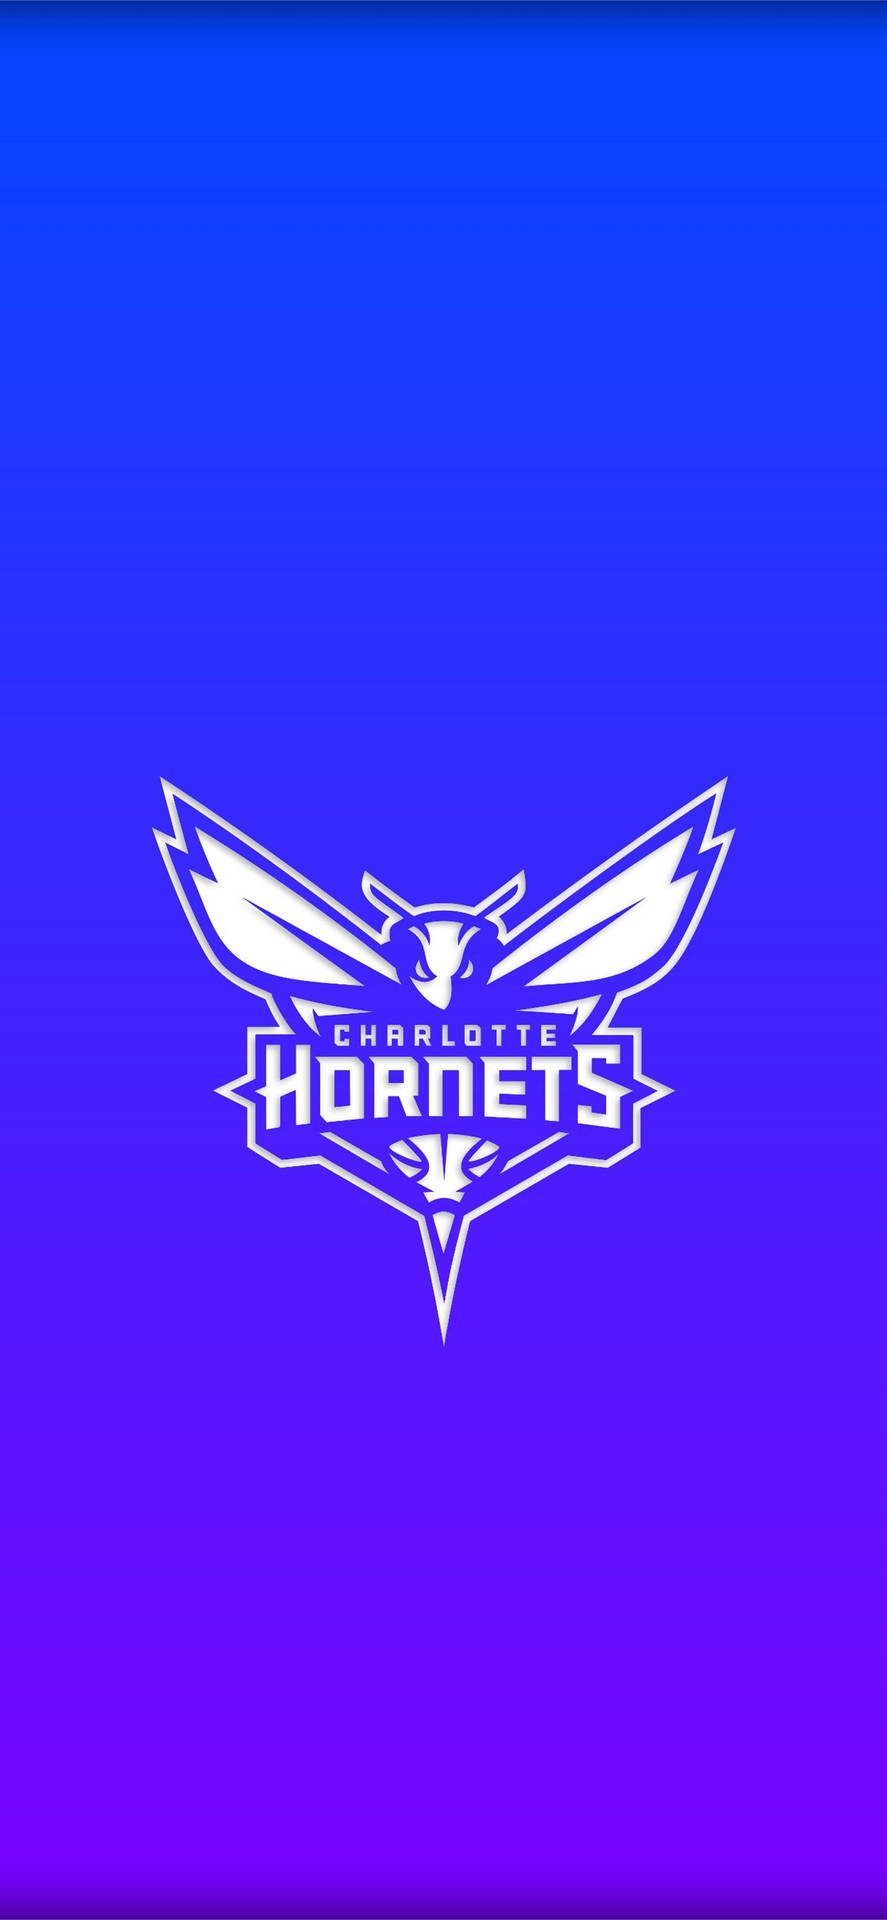 Charlotte hornets logo HD wallpapers